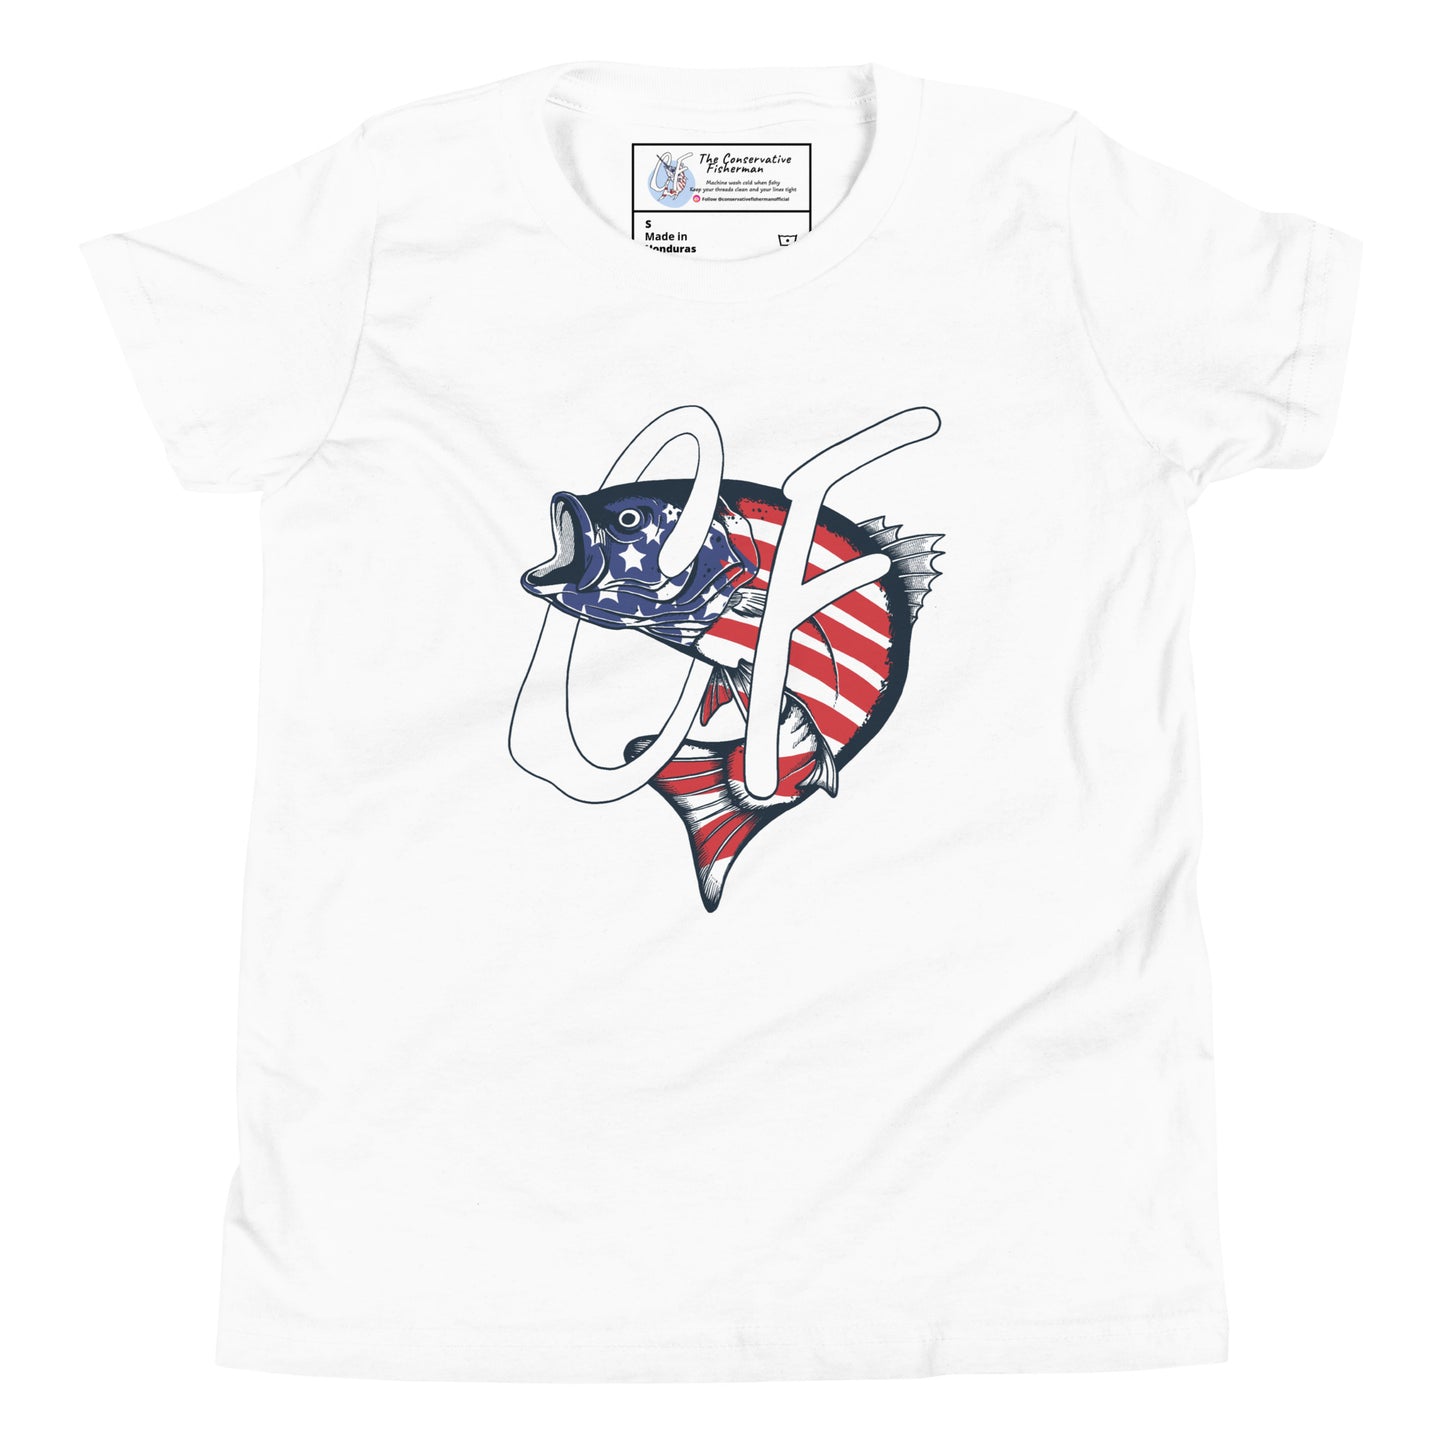 'American Striper' Youth Short Sleeve T-Shirt